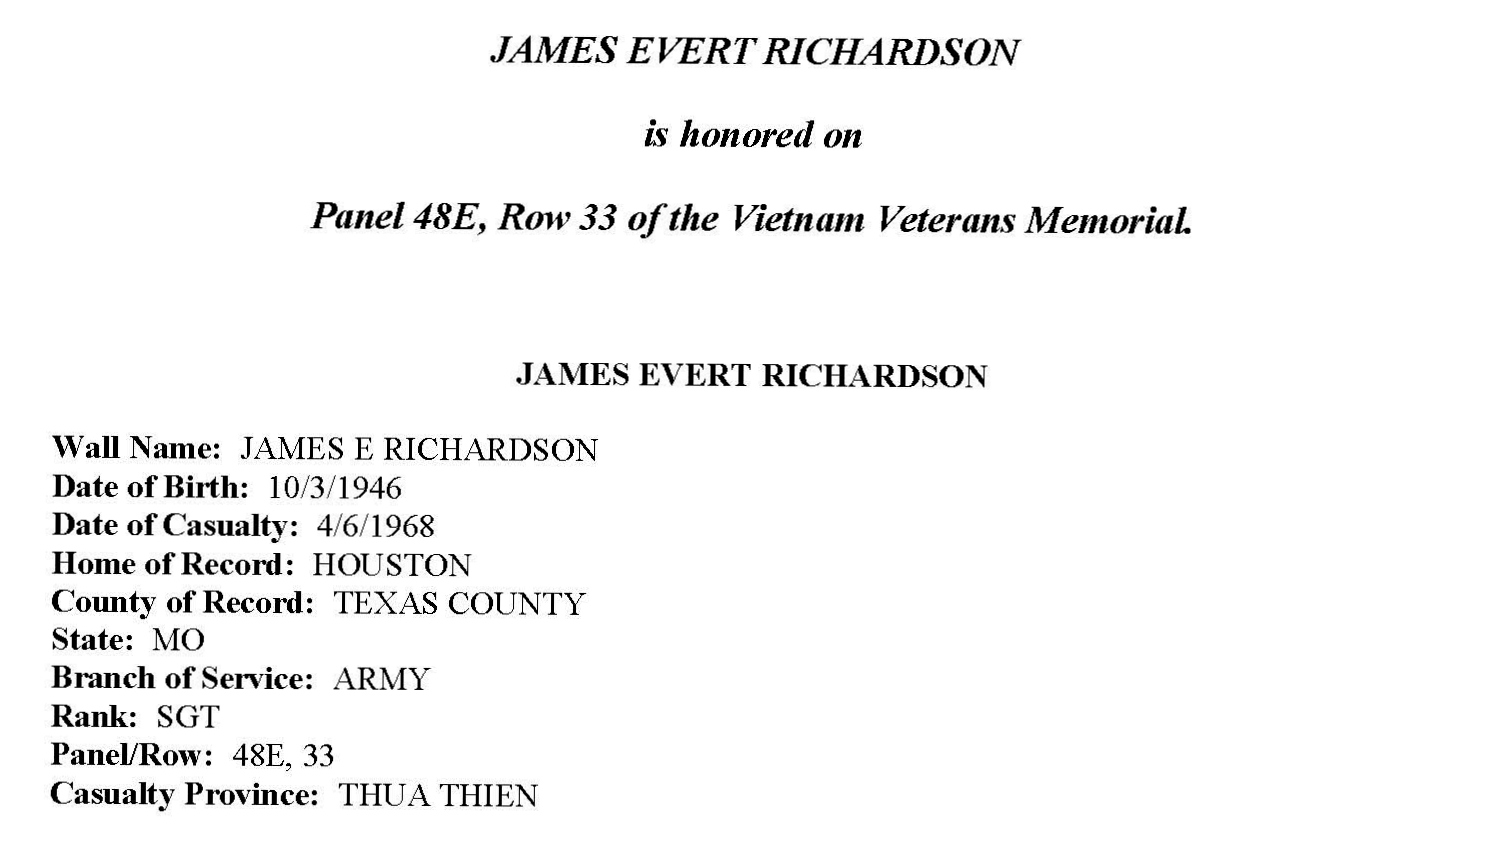 James Evert Richardson